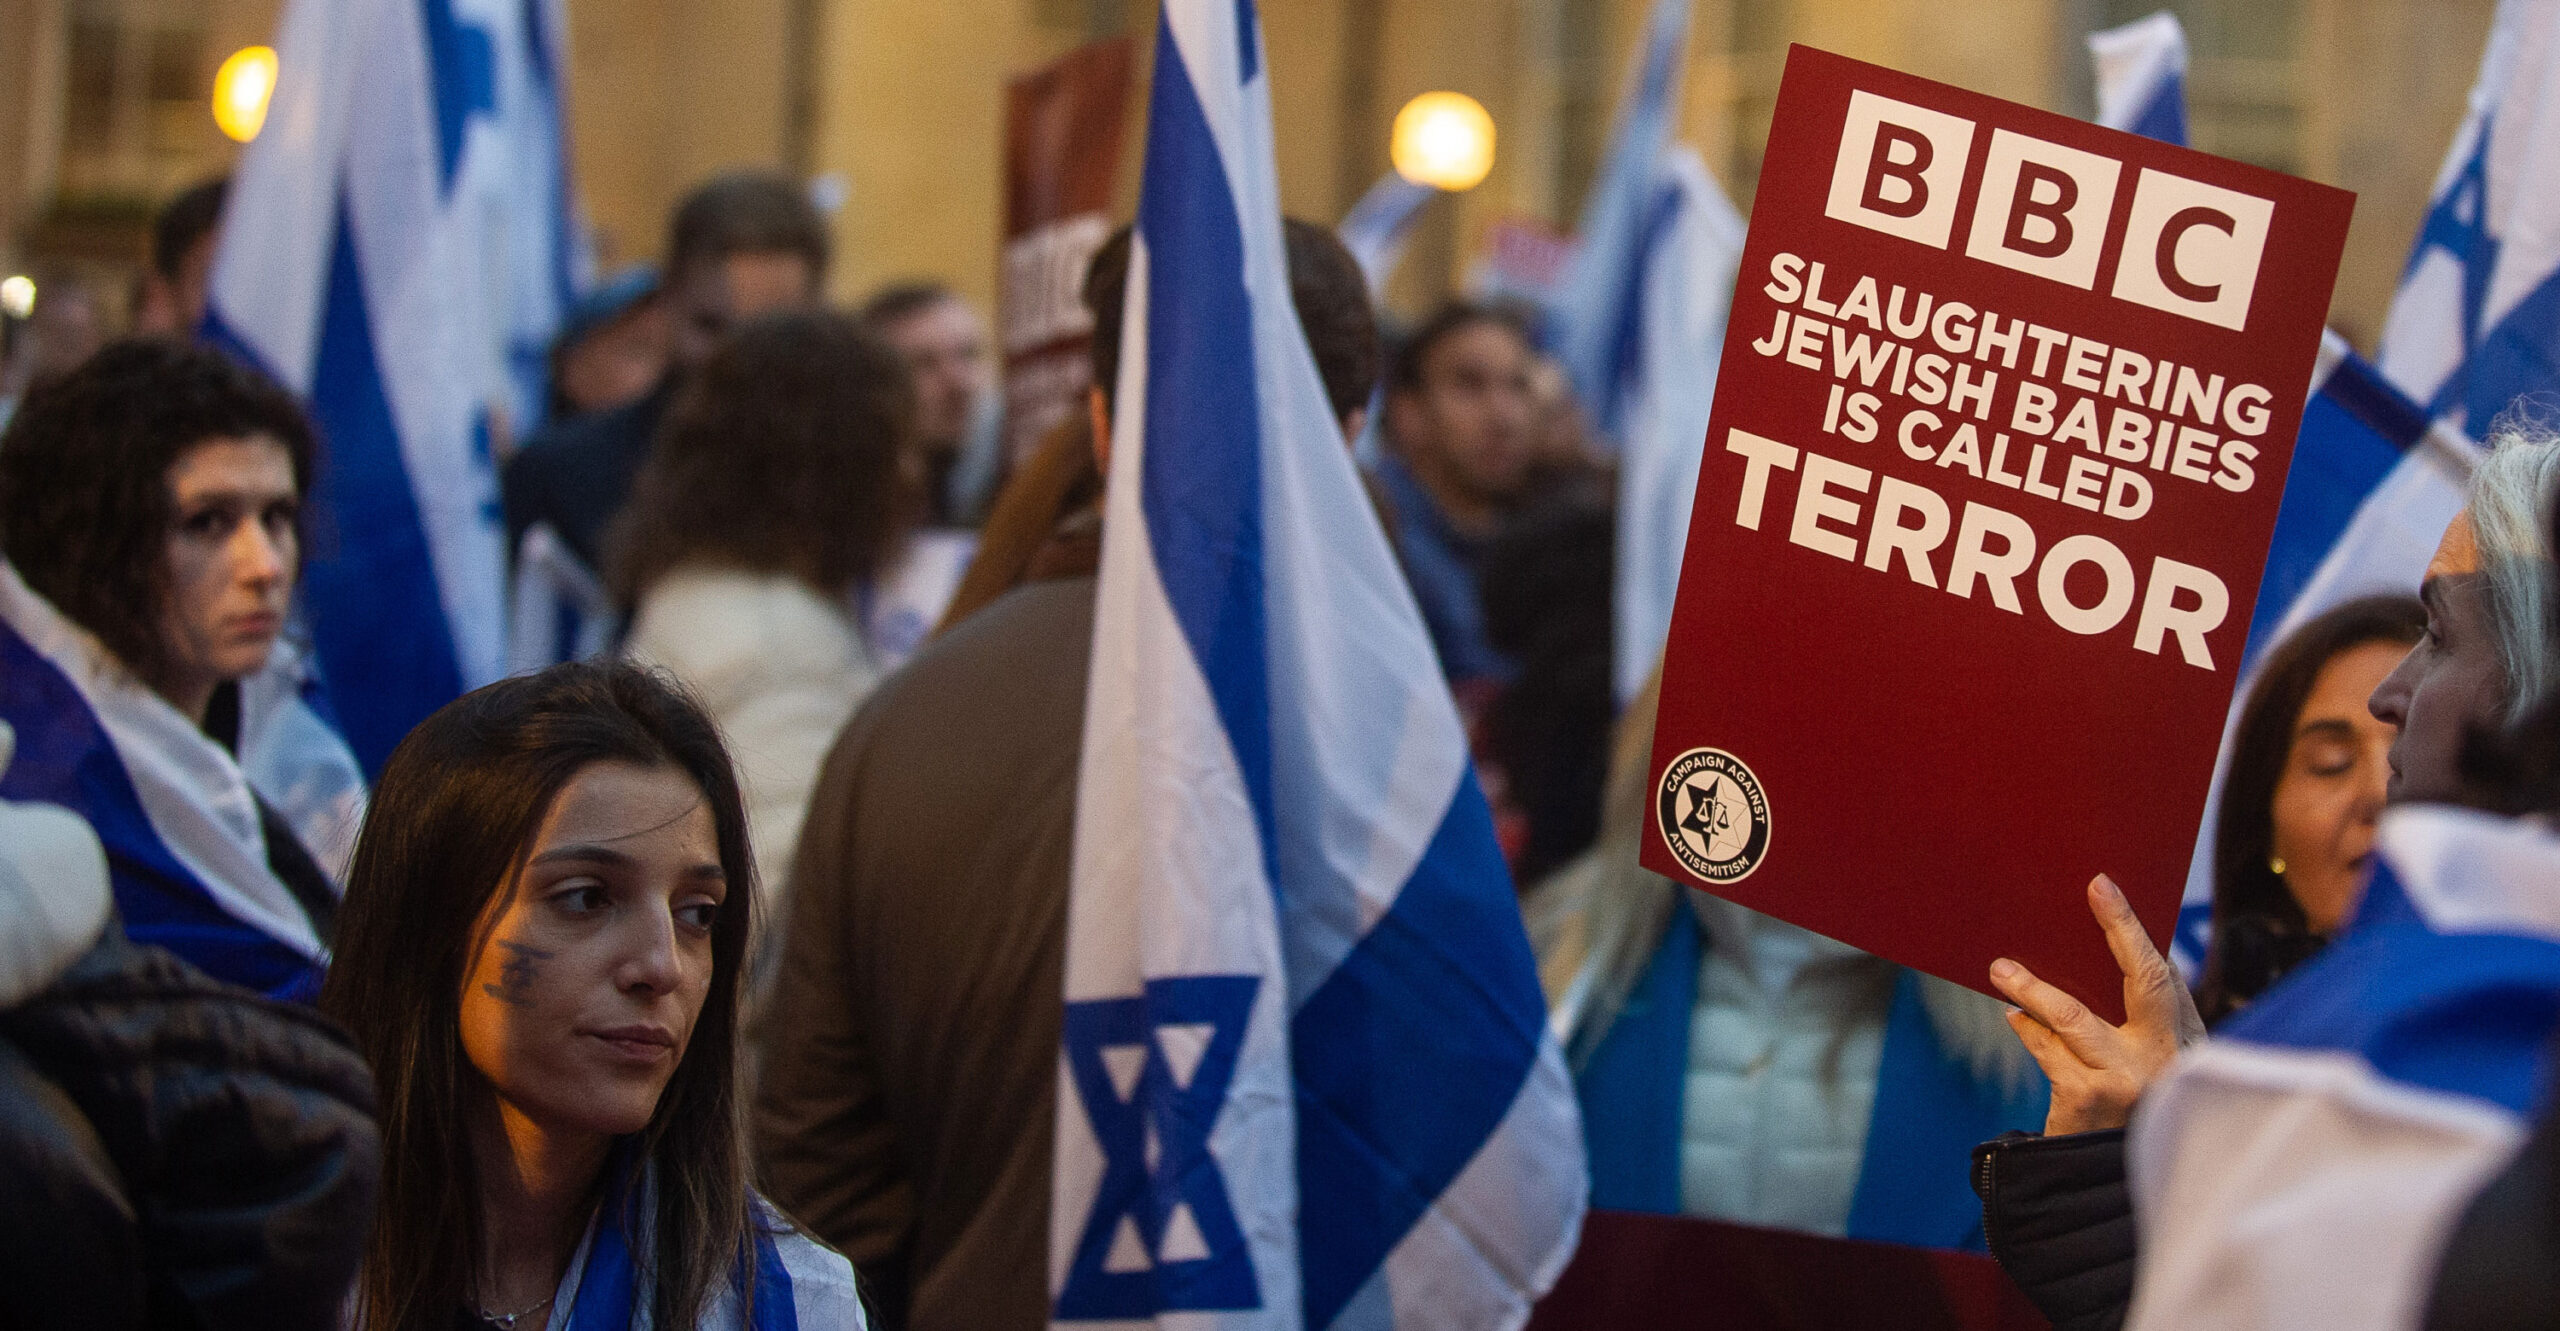 Reporting of Antisemitism, Anti-Israel Bias Gets Short Shrift From Media